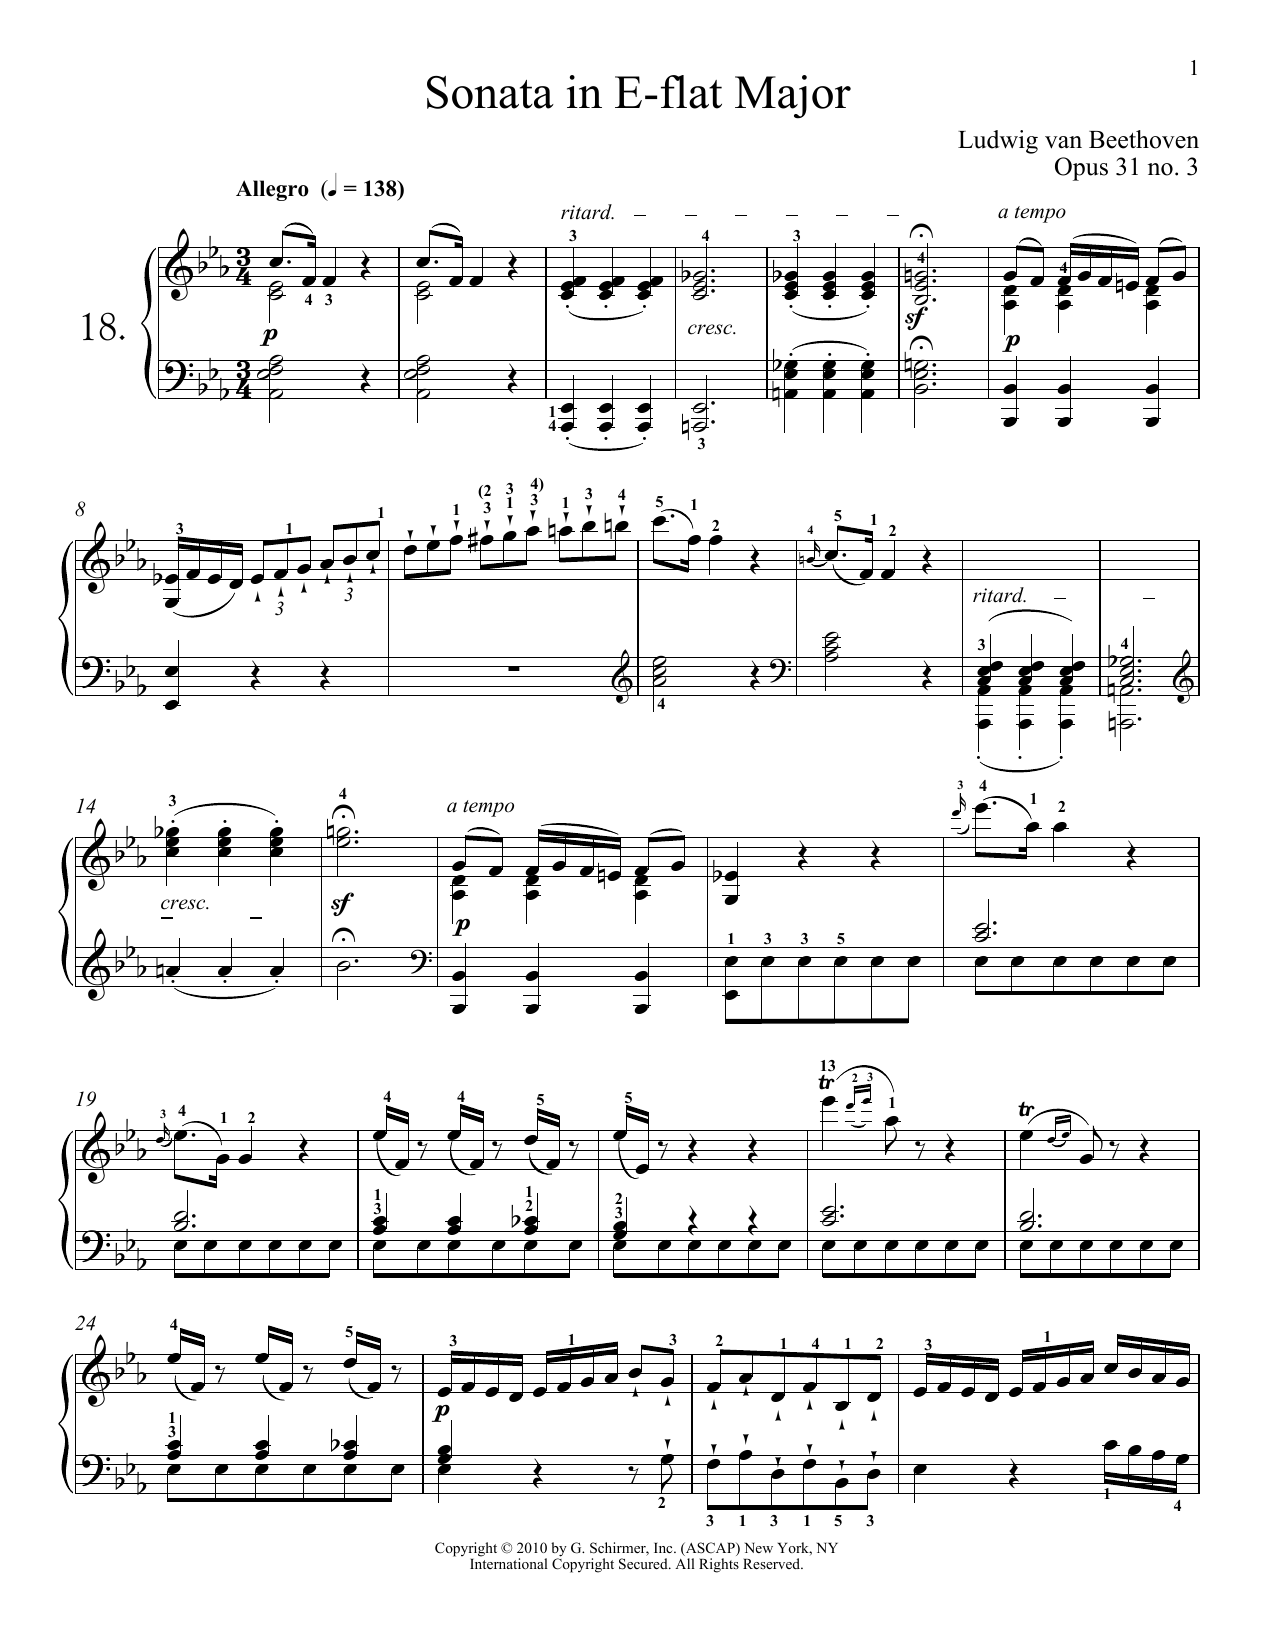 Ludwig van Beethoven Piano Sonata No. 18 In E-flat Major, Op. 31, No. 3 Sheet Music Notes & Chords for Piano - Download or Print PDF